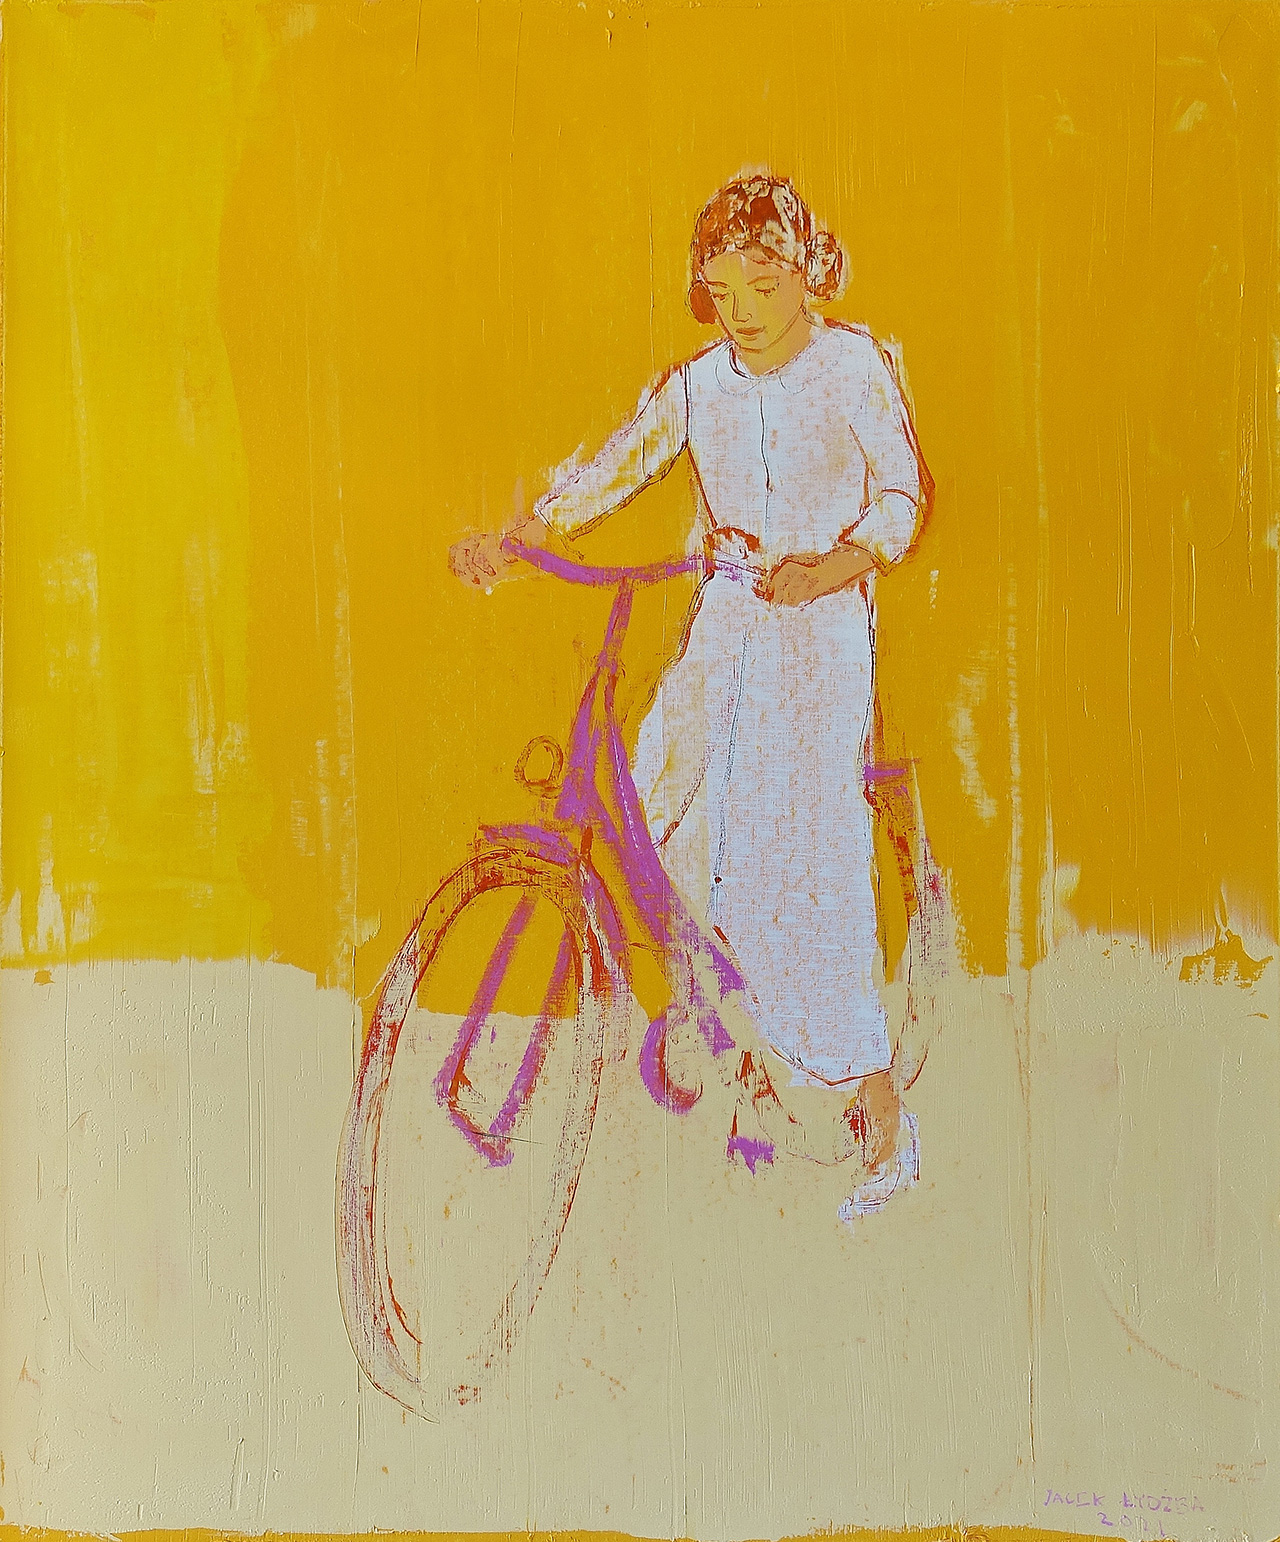 Jacek Łydżba - Cyclist (Oil on Canvas | Size: 106 x 126 cm | Price: 9500 PLN)